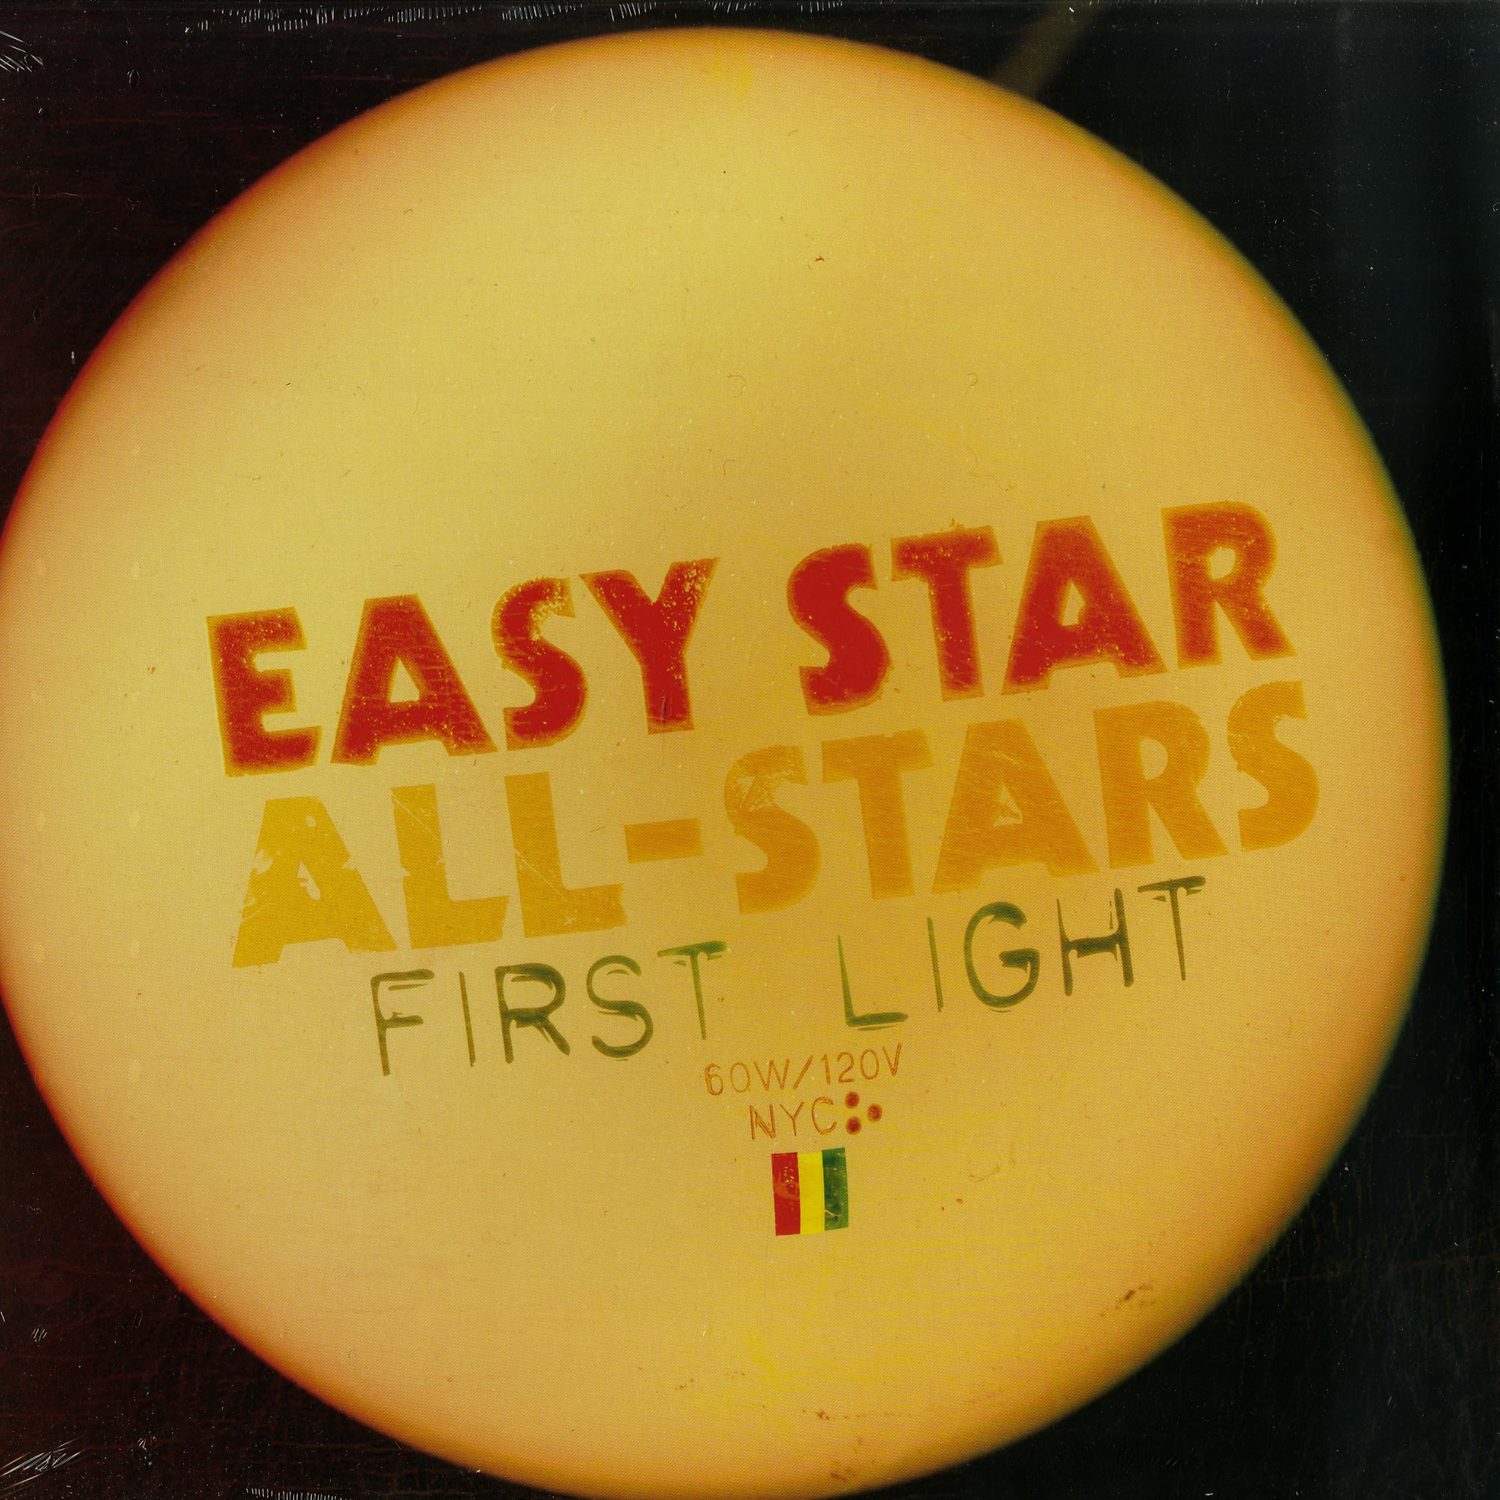 Easy Star All-Stars - FIRST LIGHT 